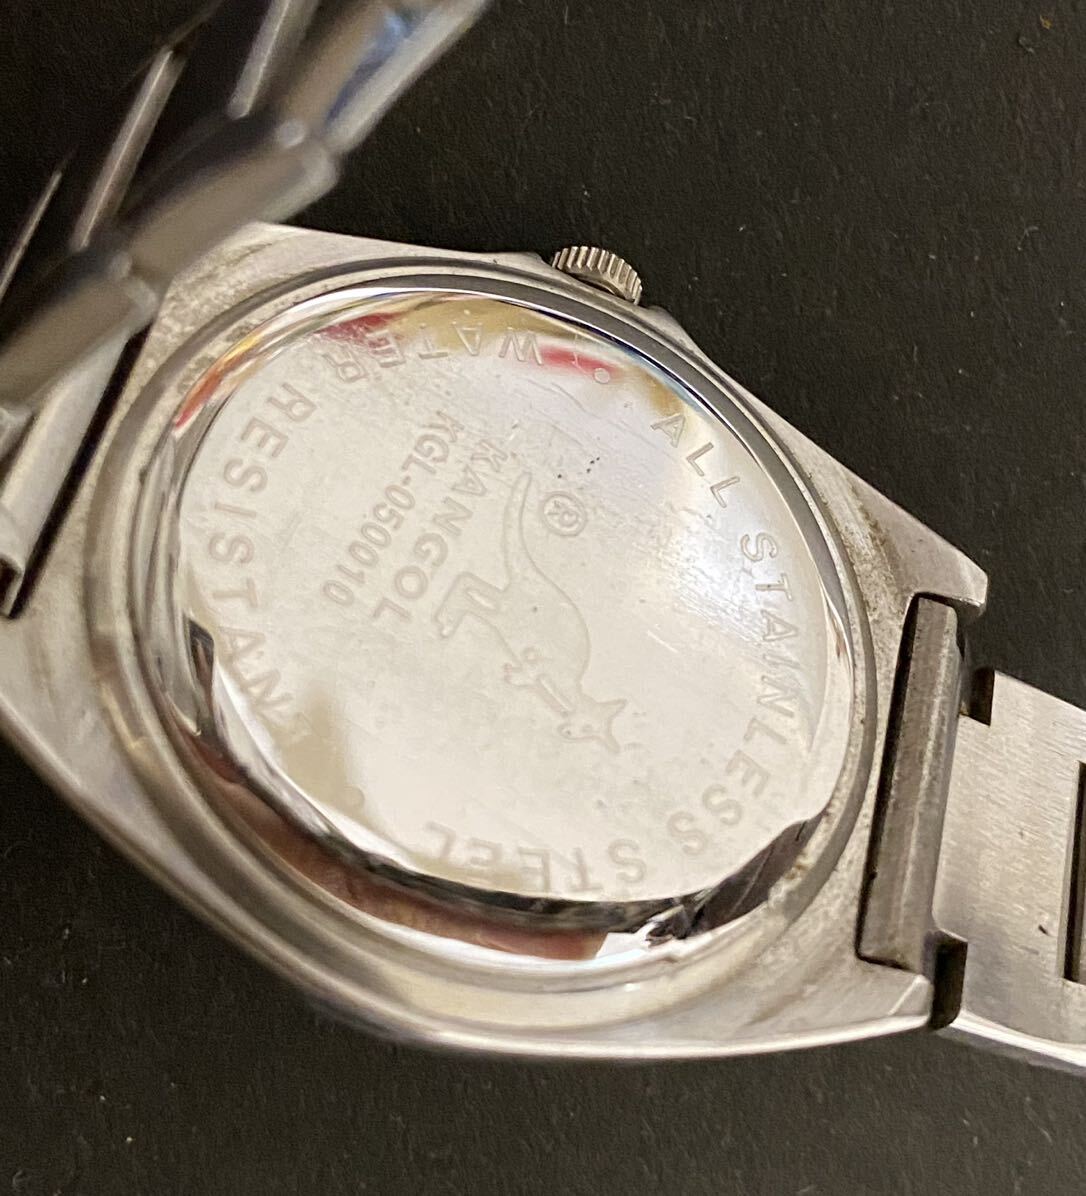 KANGOL カンゴール 腕時計 クォーツ KGL-050010 ブラック シルバーカラー メンズ ウォッチ watch 金属ベルト 未稼働品の画像6